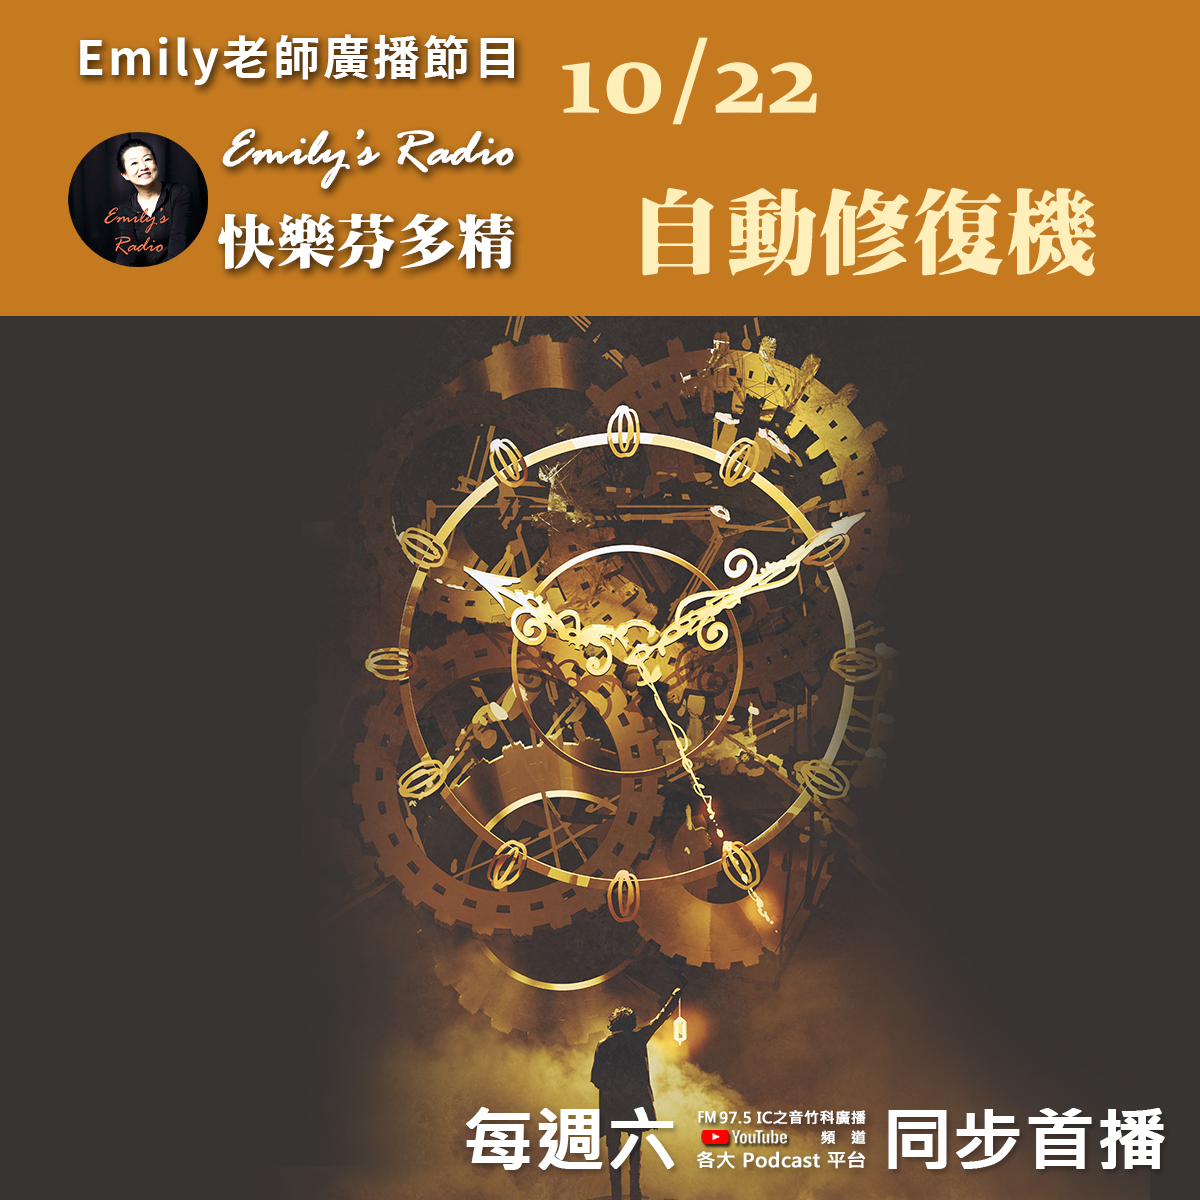 Emily老師「快樂芬多精」節目-2022/10/22-自動修復機